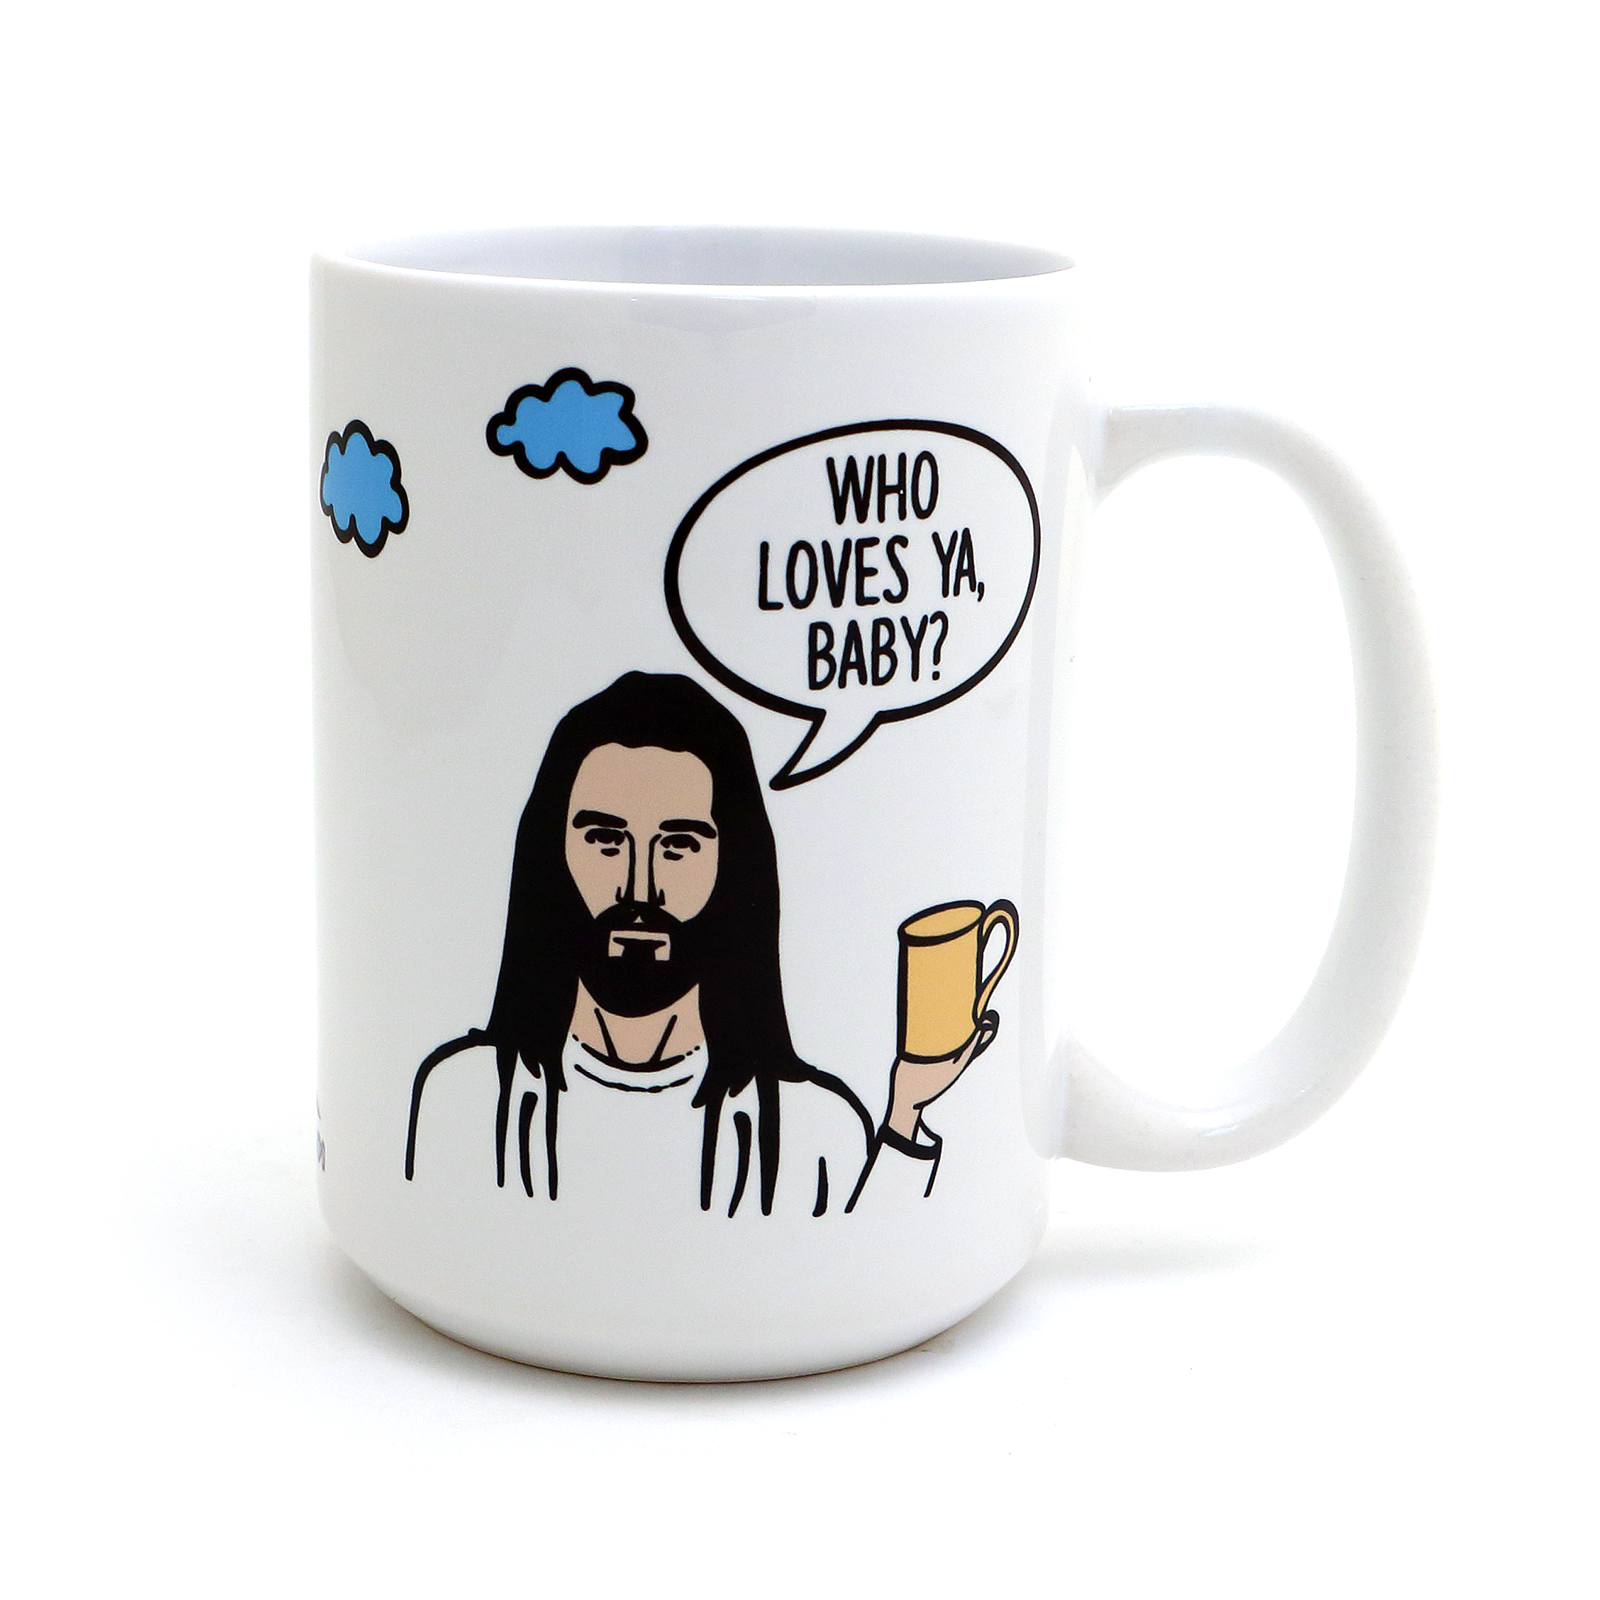 Dowan 15Oz Ceramic Coffee Mug To Make Your Morning More Enjoyable